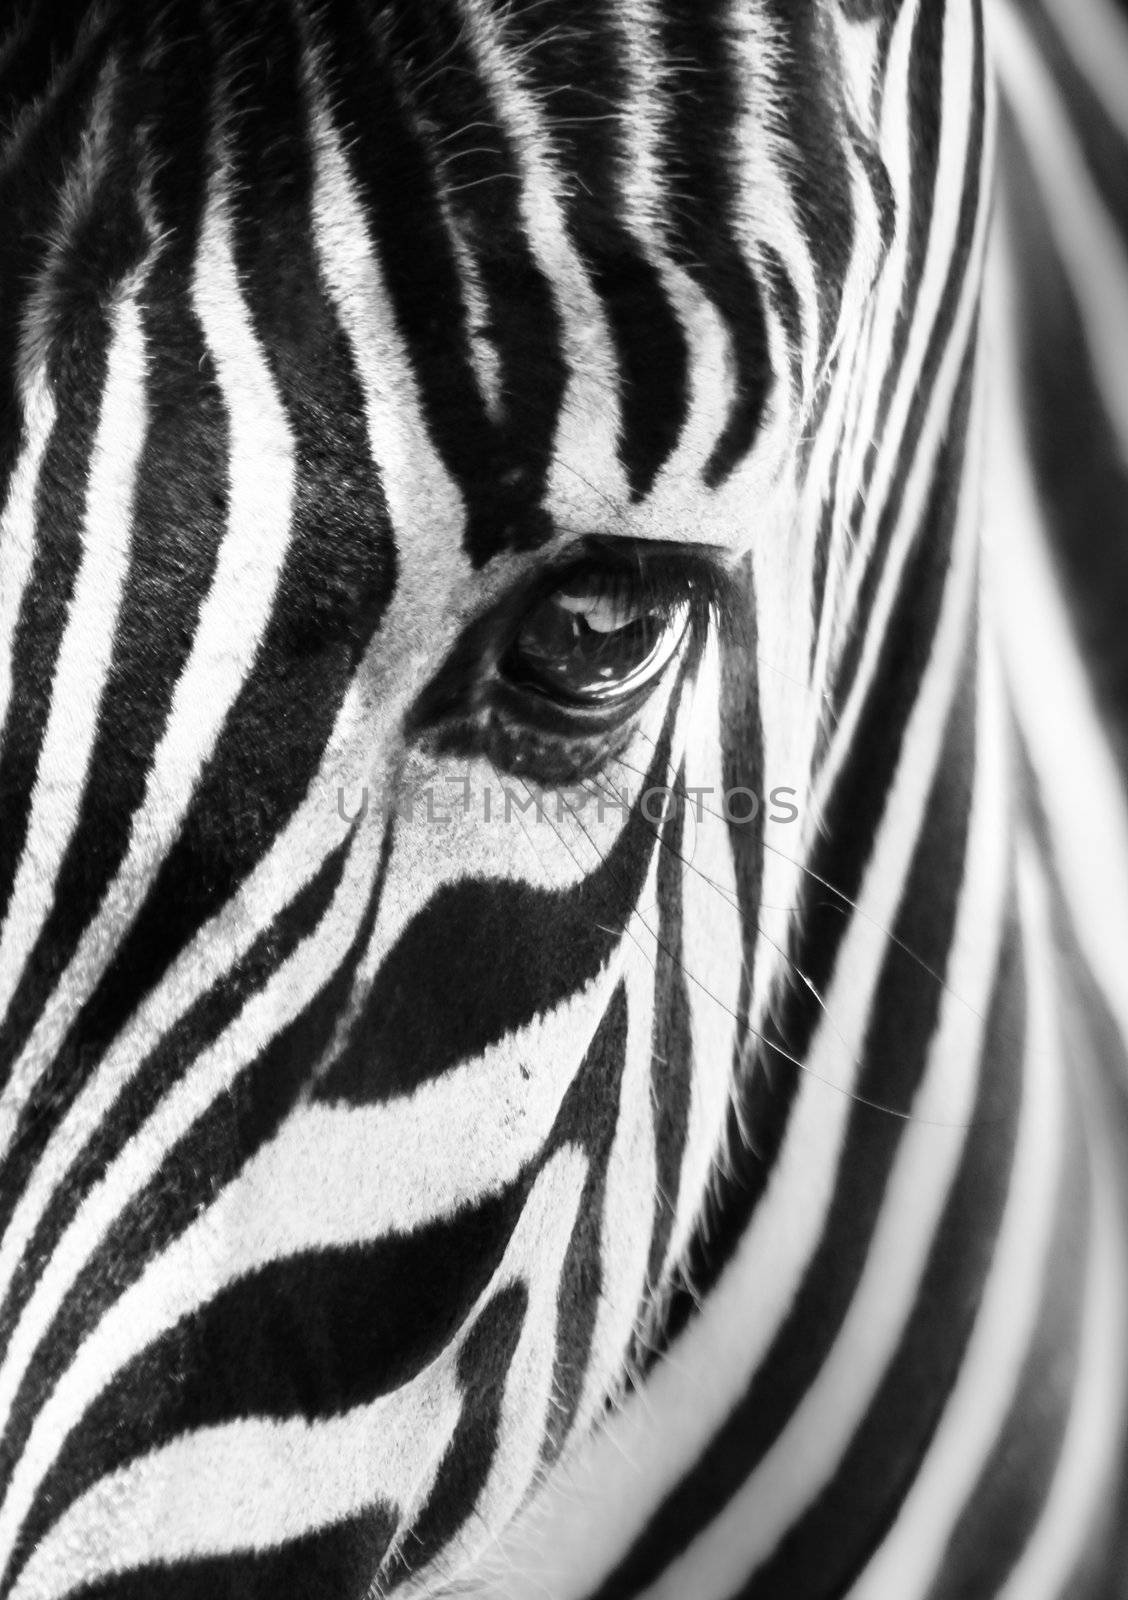 Artistic closeup portrait of a zebra - emphasized graphical pattern.